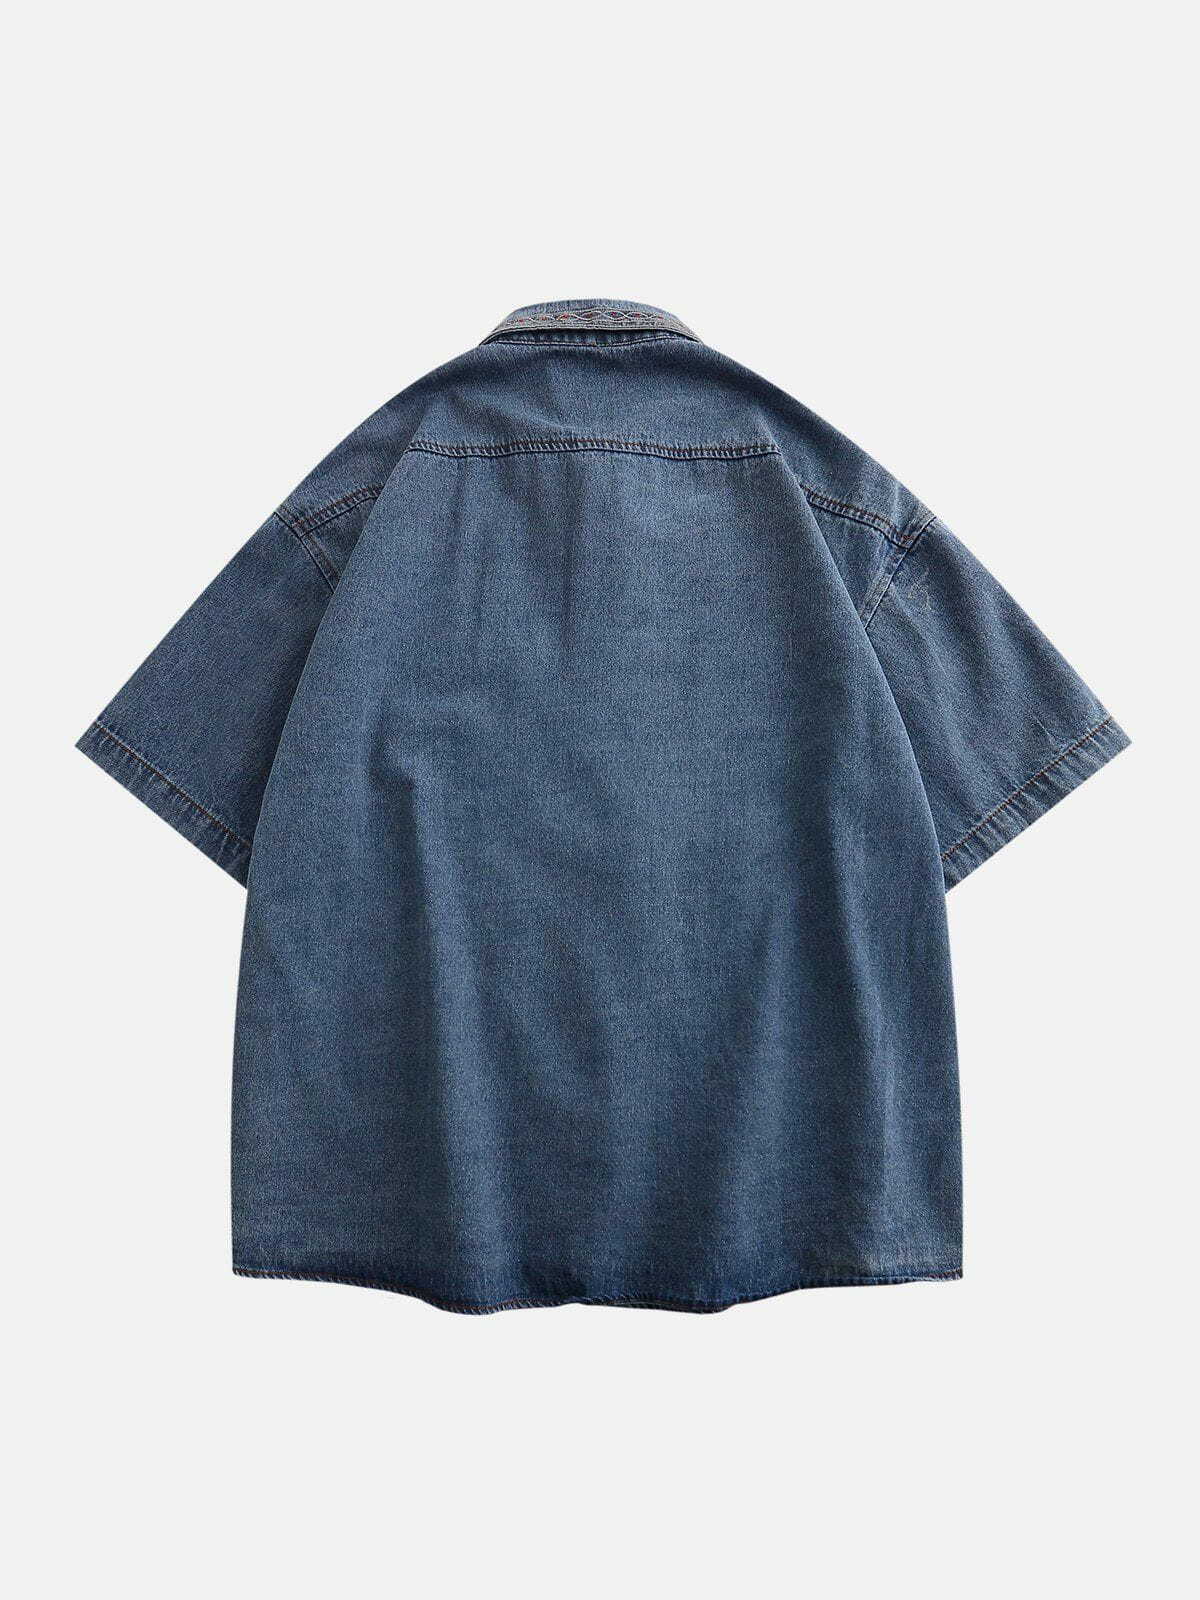 denim embroidered short sleeve shirt vintage stitched edge 5305